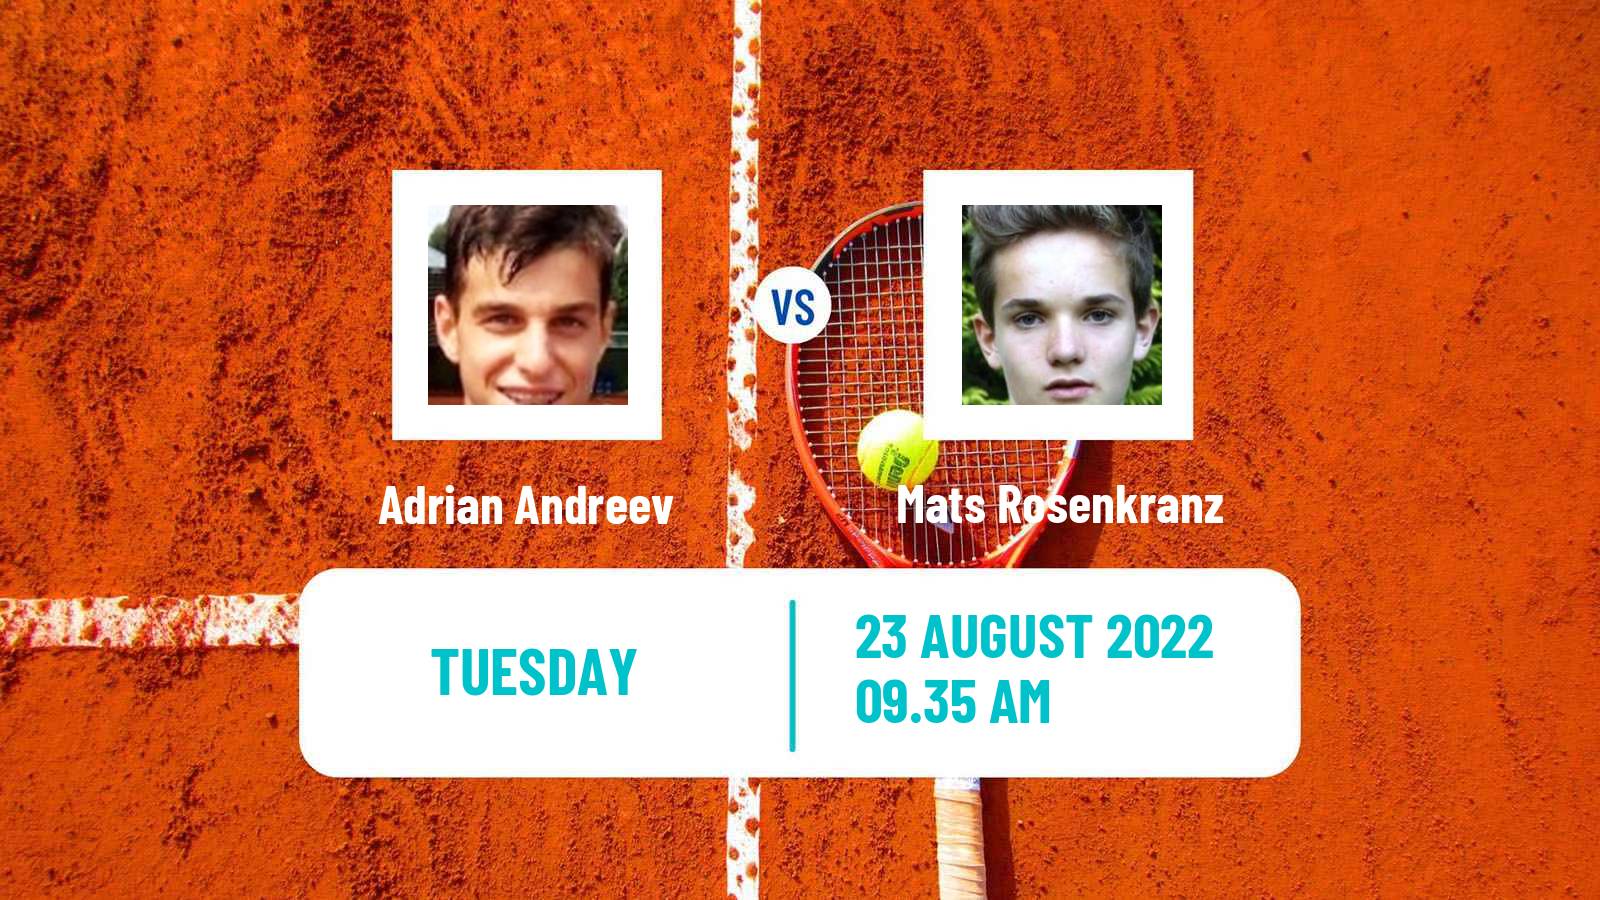 Tennis ATP Challenger Adrian Andreev - Mats Rosenkranz